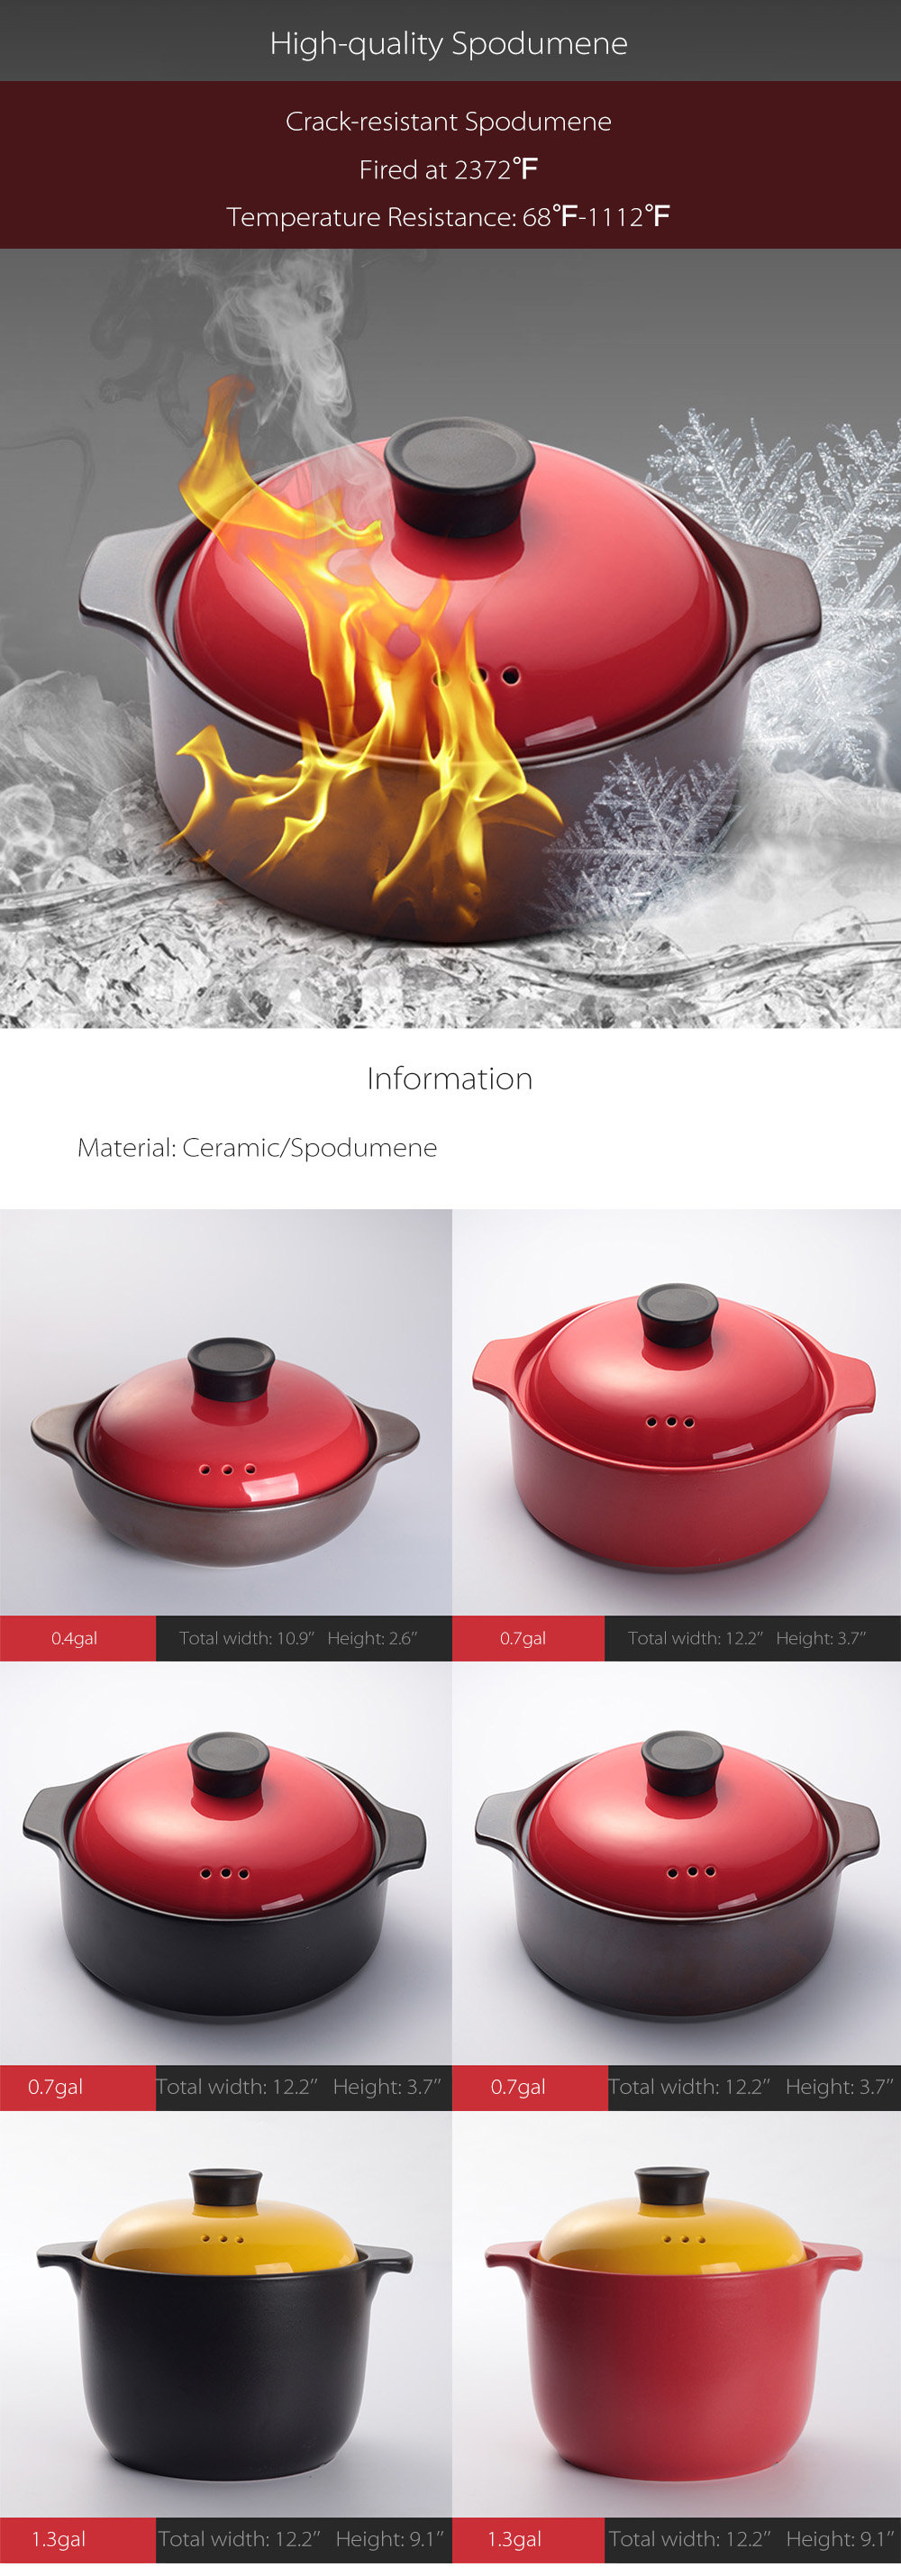 Ceramic Cherry or Strawberry-Covered Casserole Cookware - ApolloBox